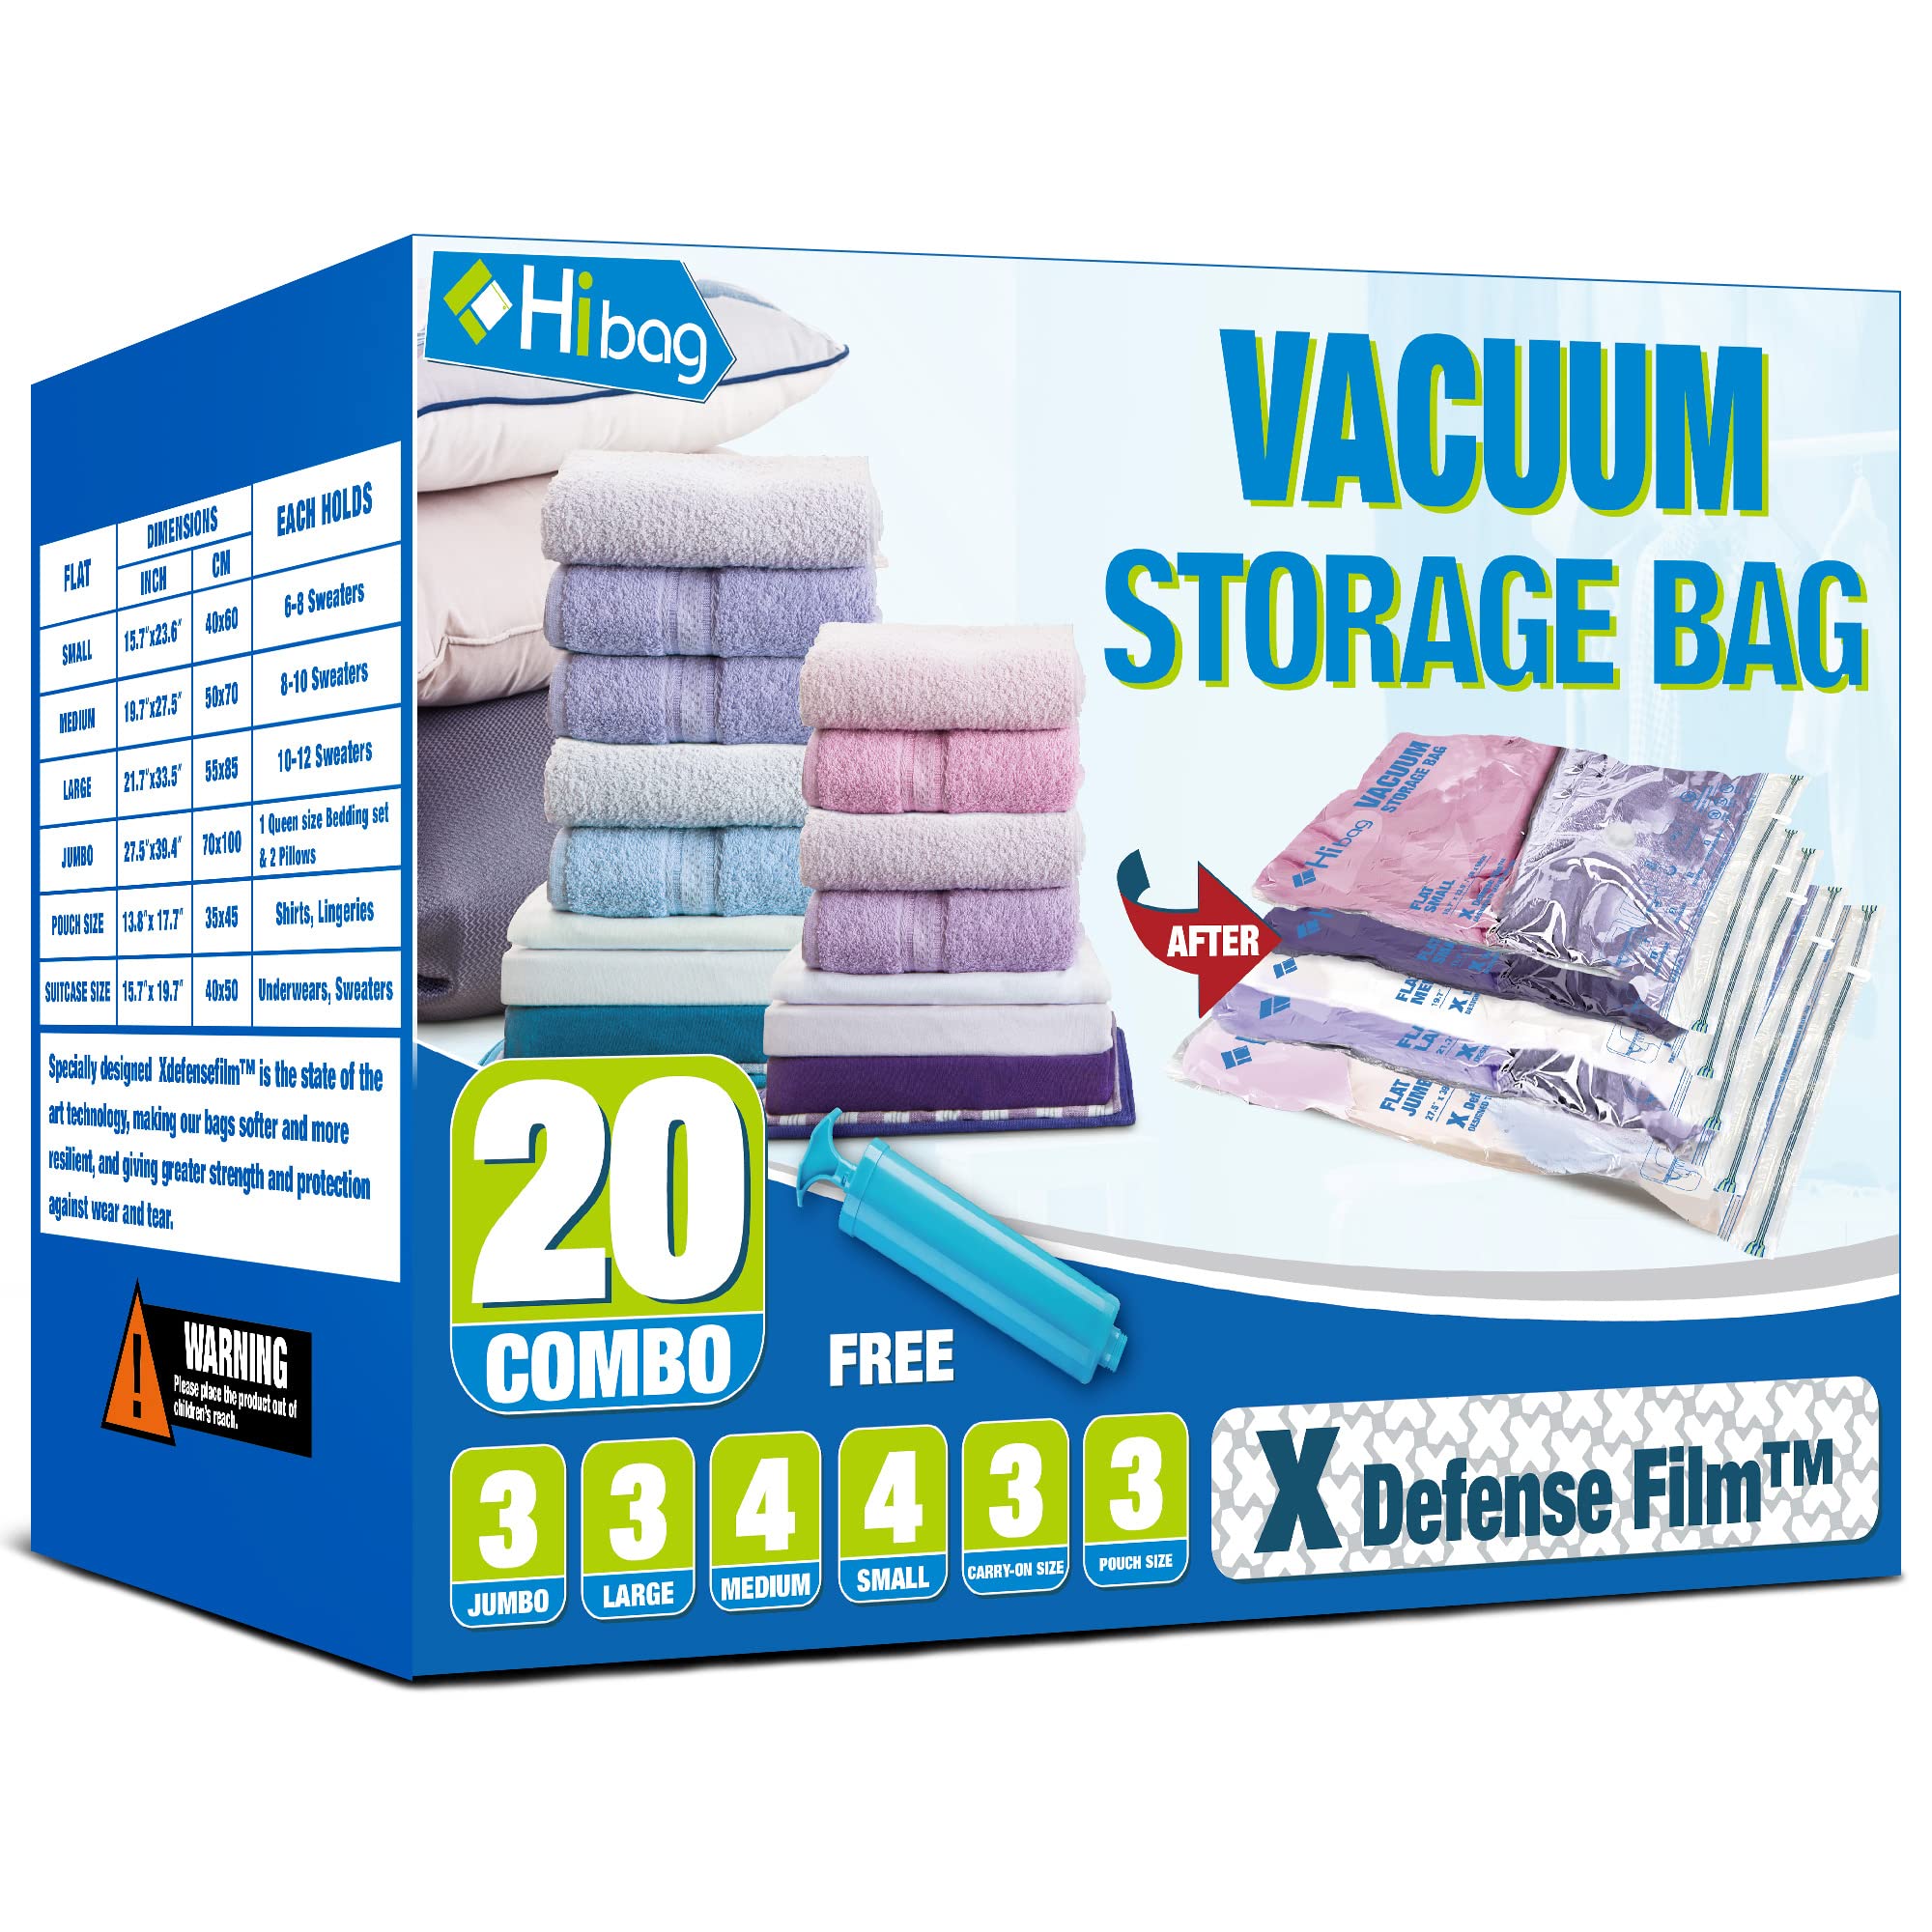 HIBAG Vacuum Storage Bags